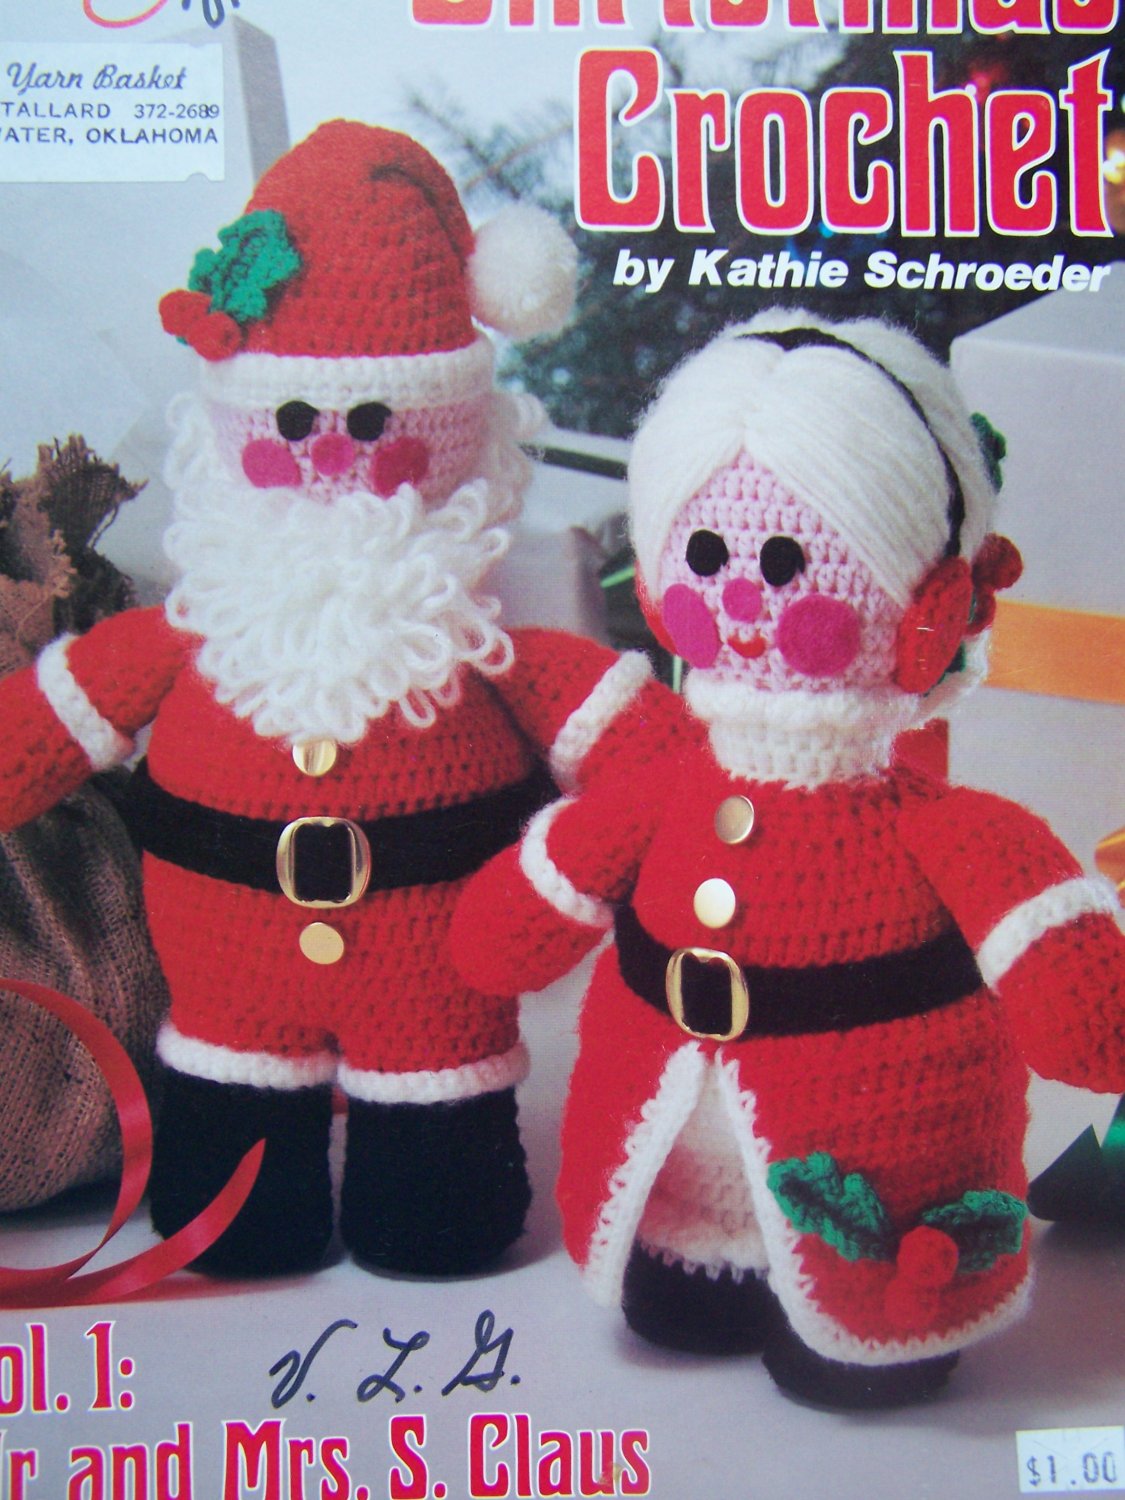 USA Free S&H Vintage 1970's Santa & Mrs Claus Crochet